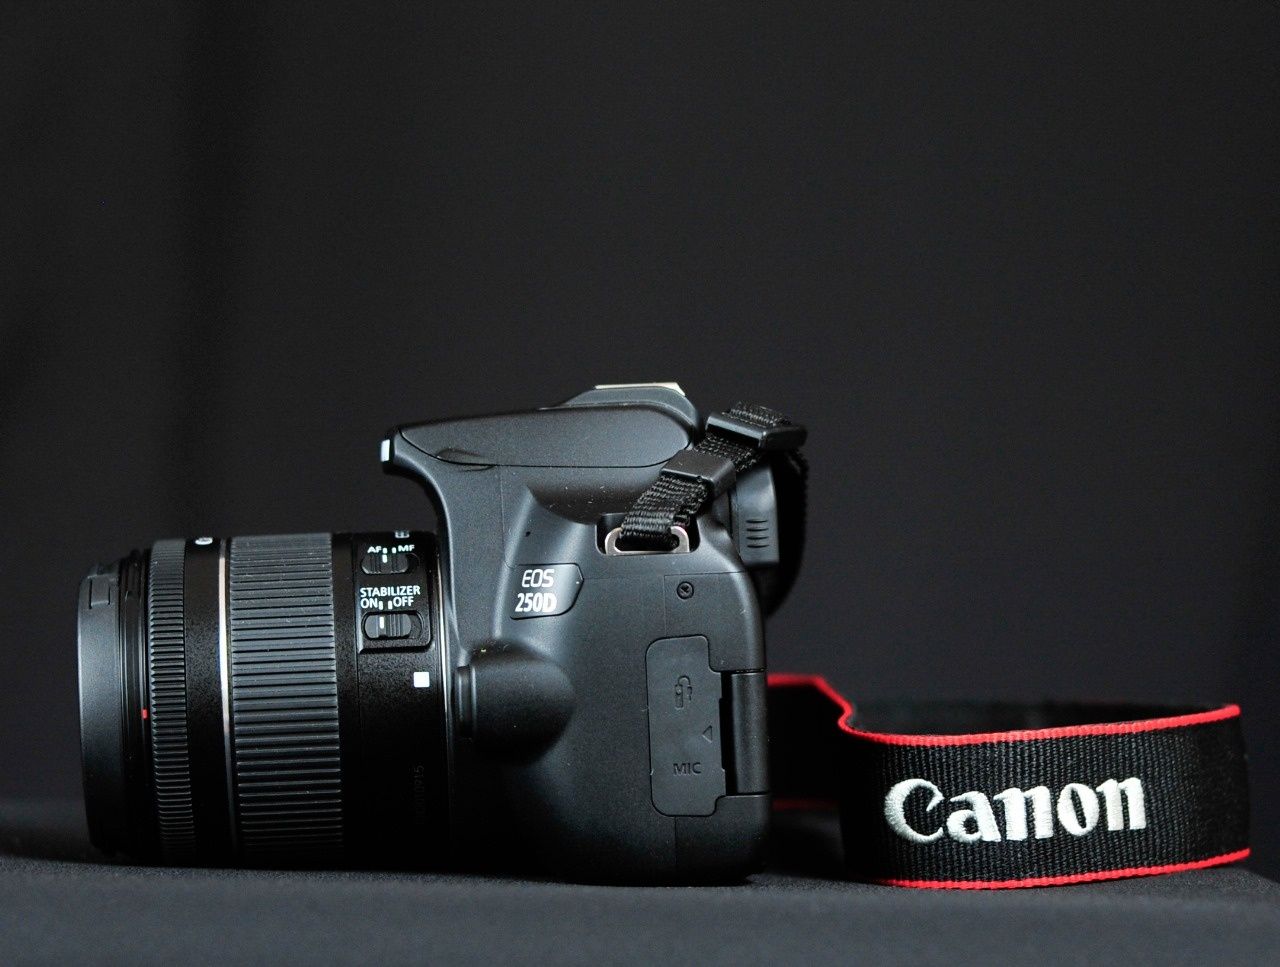 Kit Canon EOS 250D